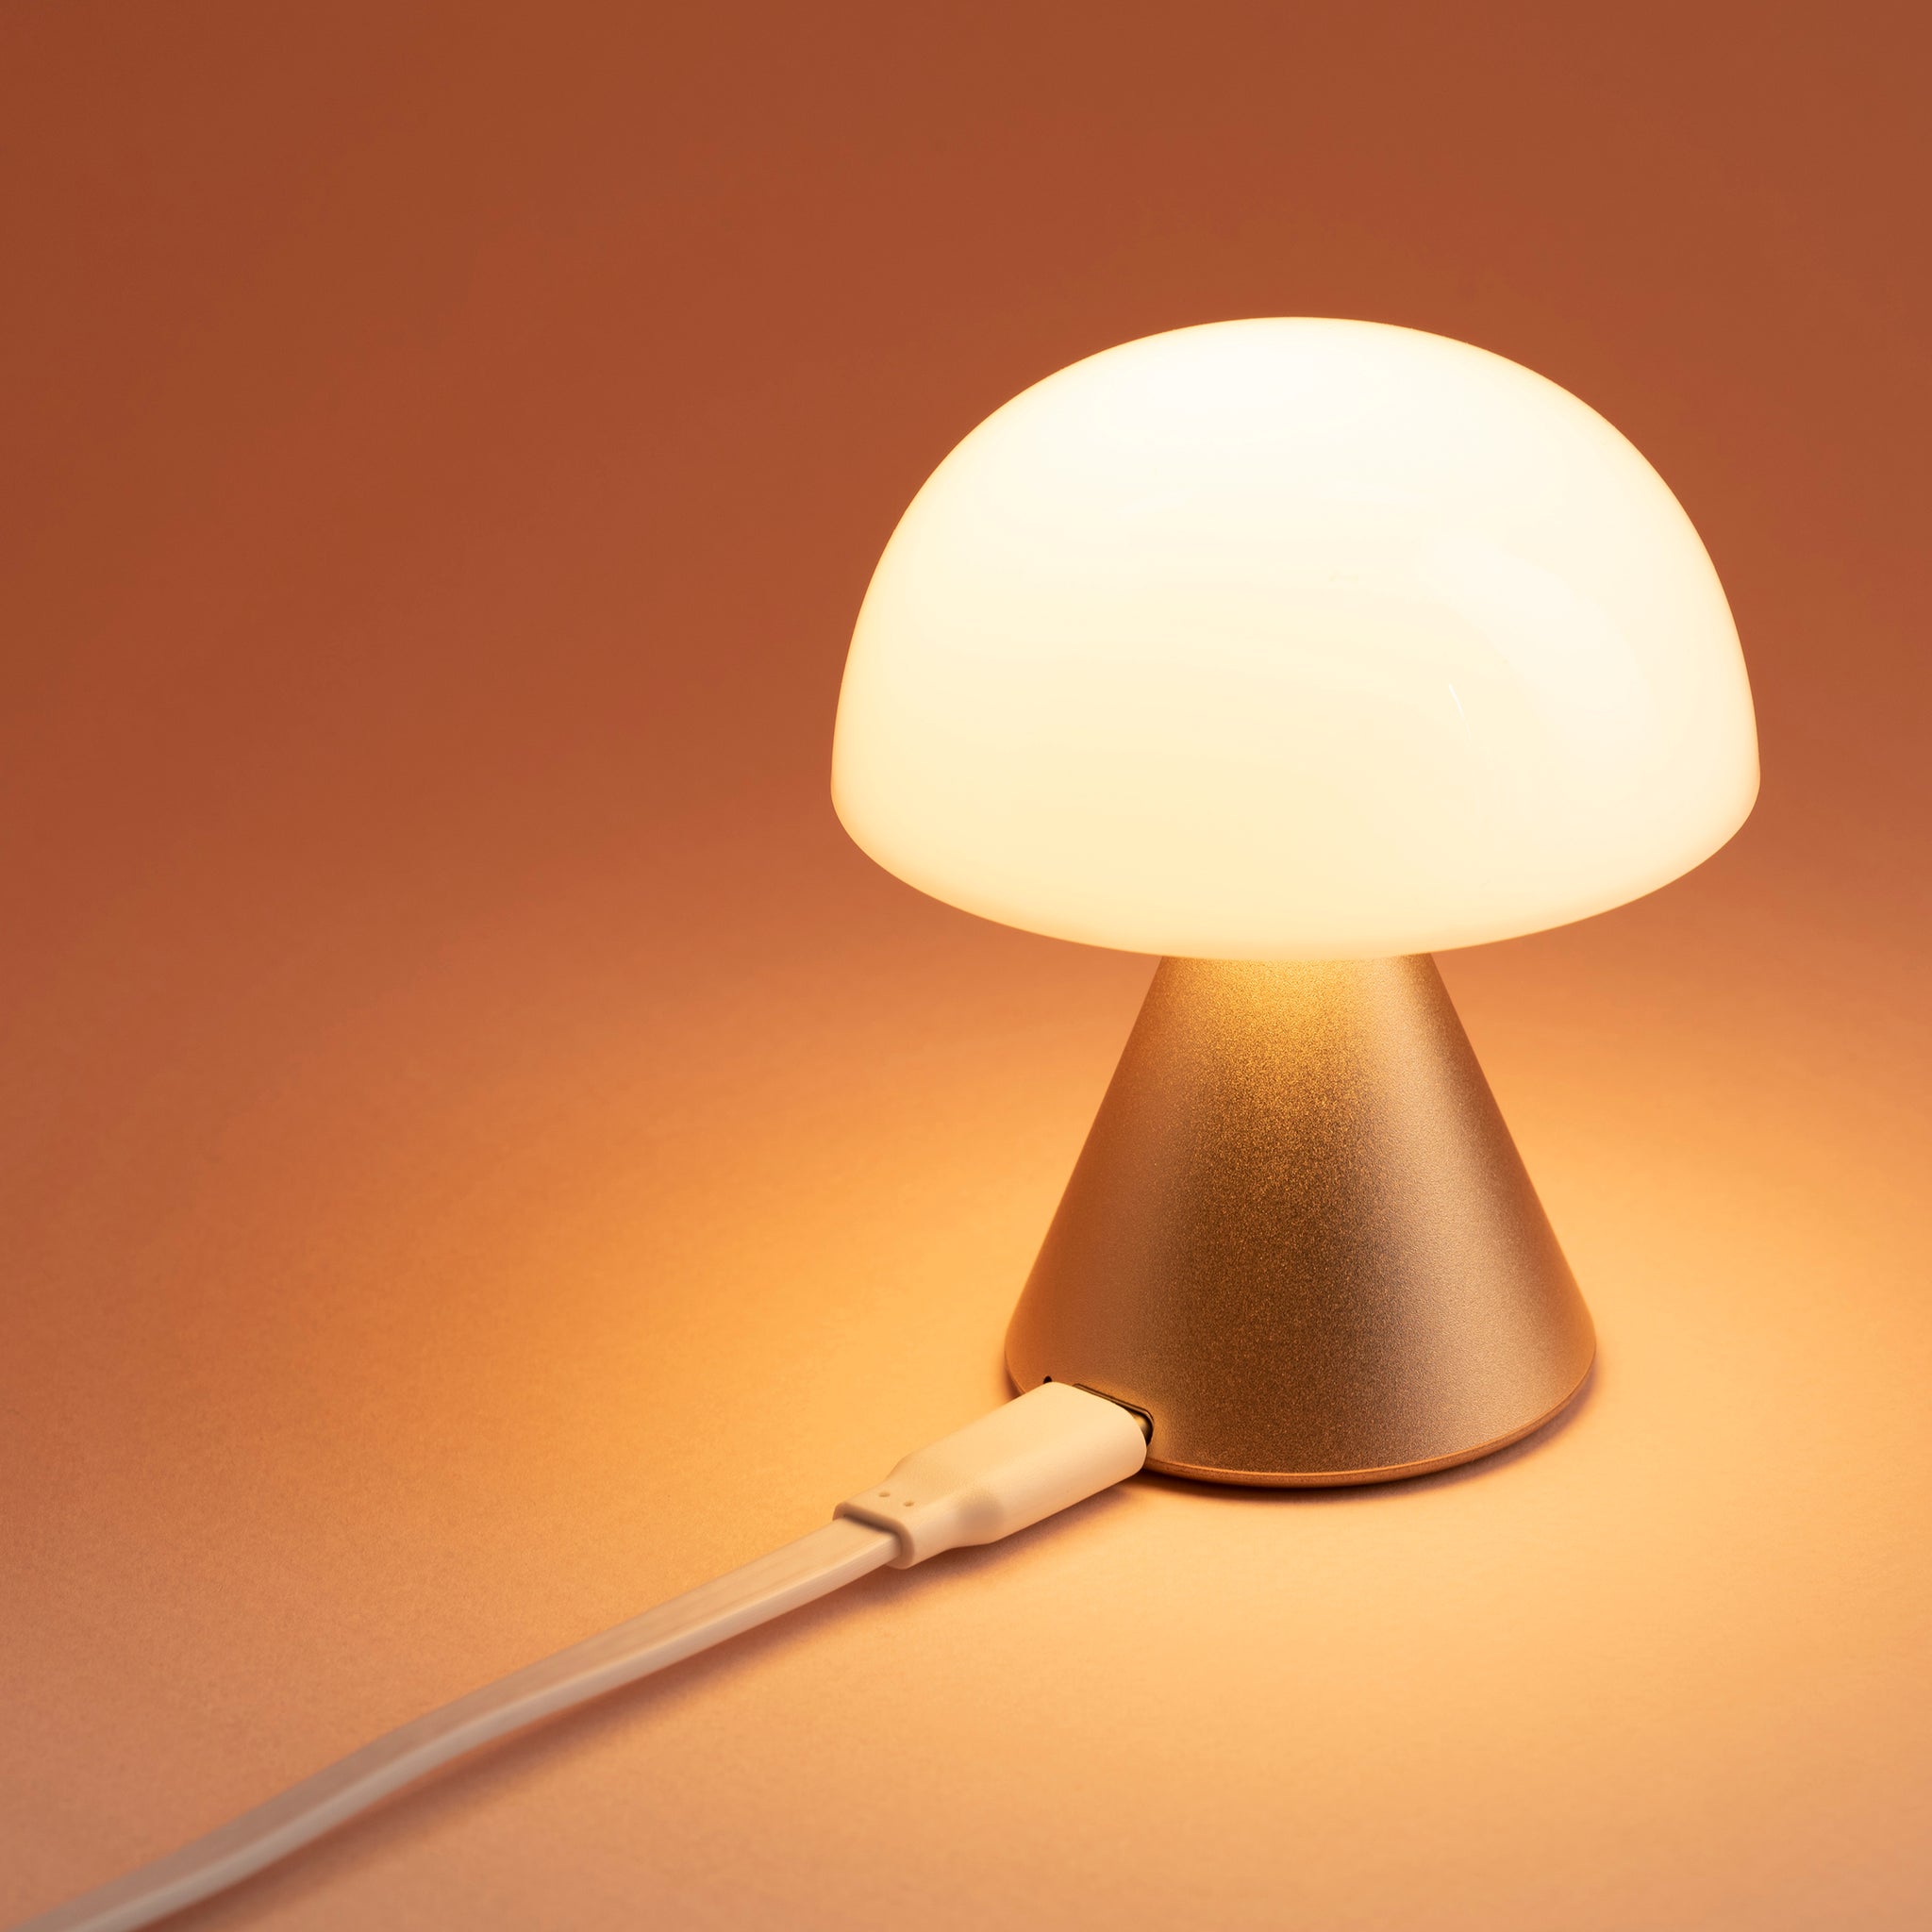 Lexon Mina Small Soft Gold│Oplaadbare LED lamp│art. LH60MD│met USB-kabel ne gele achtergrond